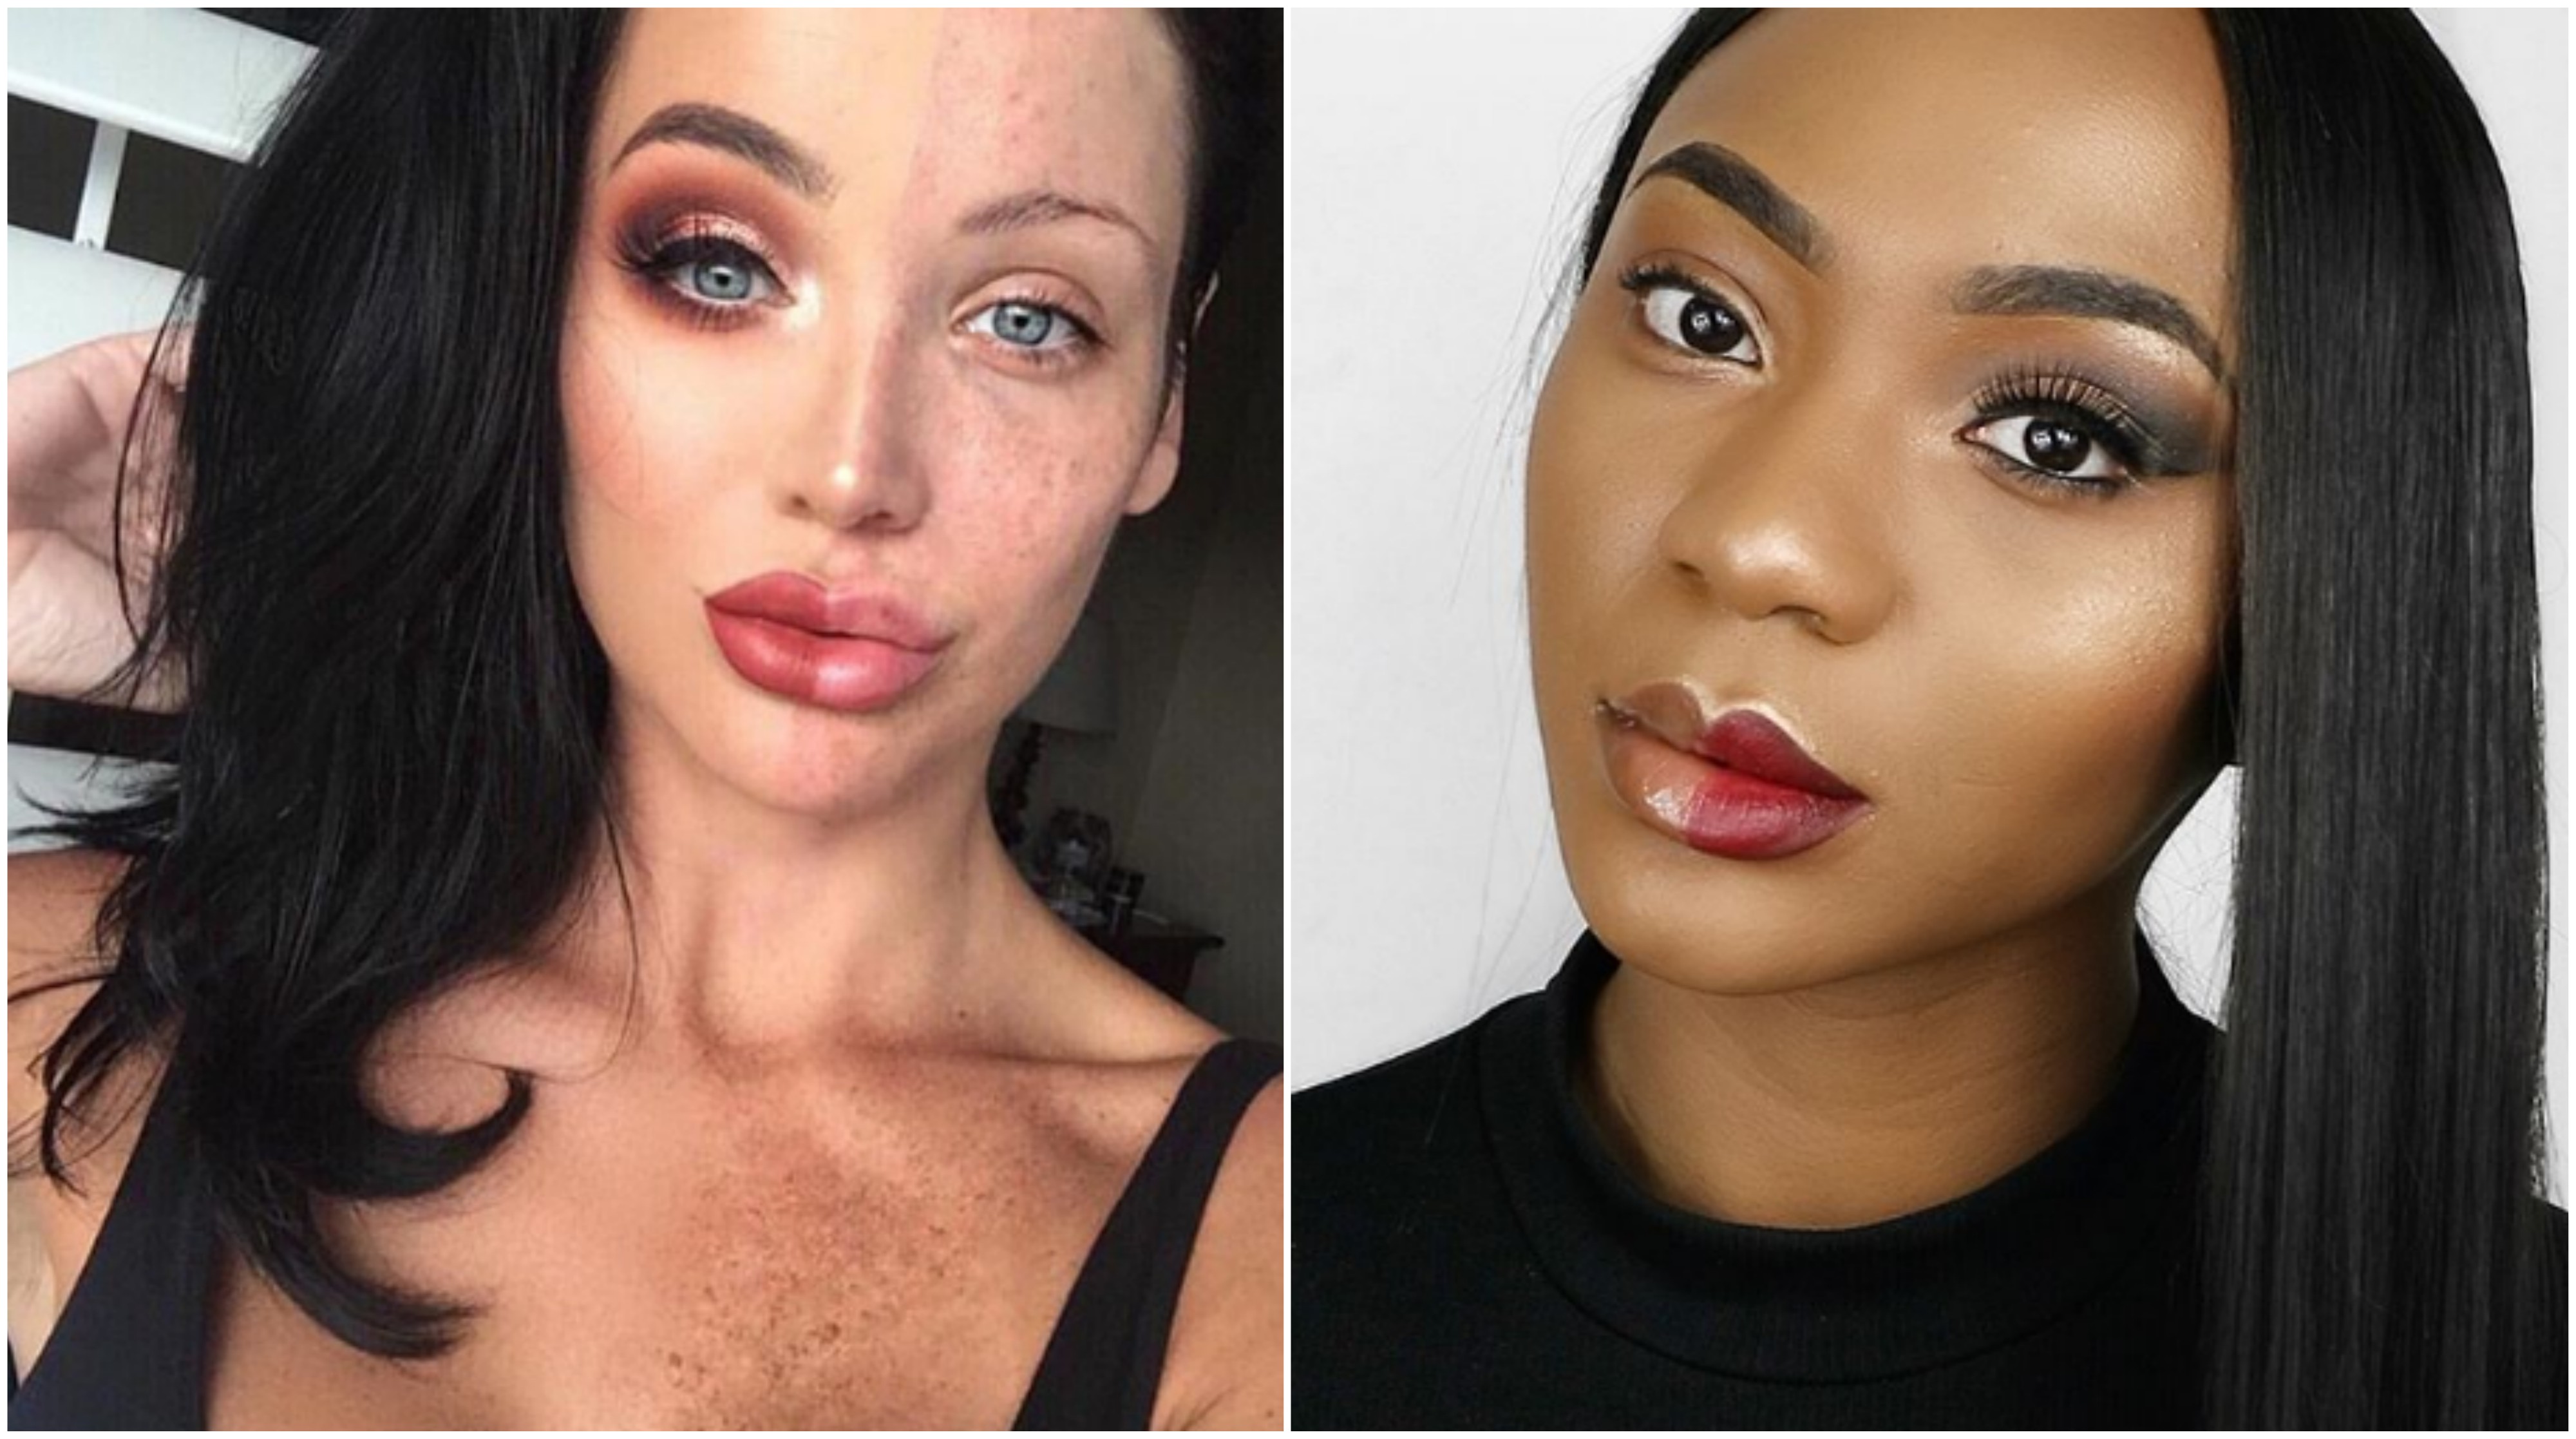 makeup, girls with makeup, Instagram, girls without makeup, beauty standard...